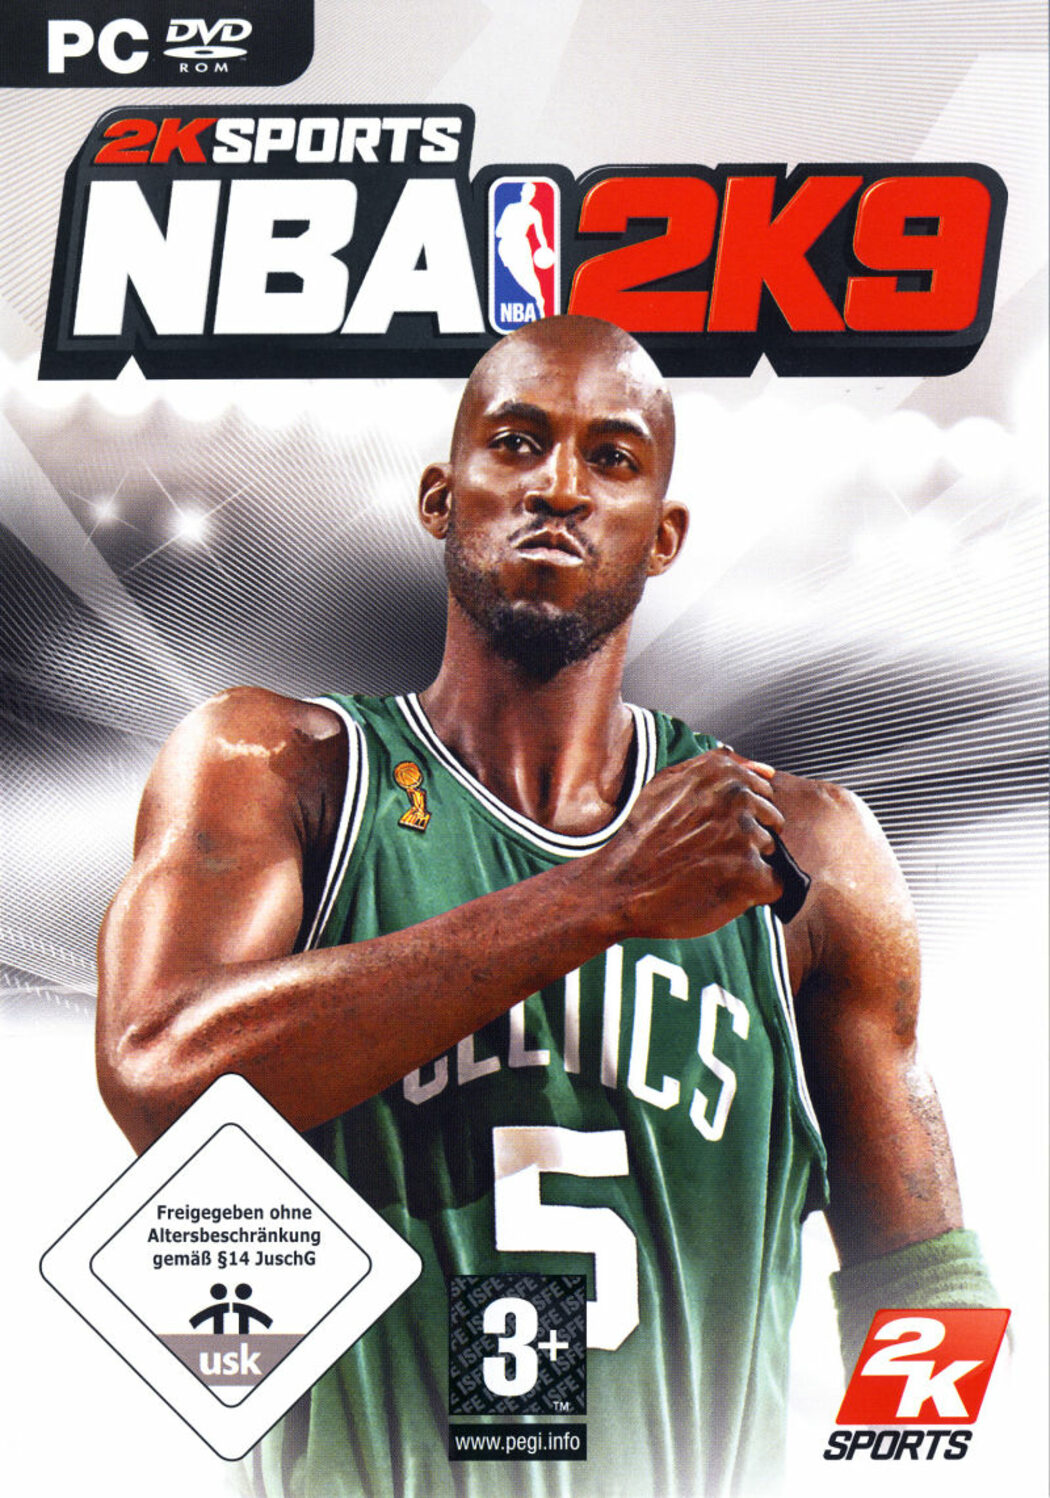 NBA 2K9 Demands Non-Existent CD Key To Install; Steam Offers Fix